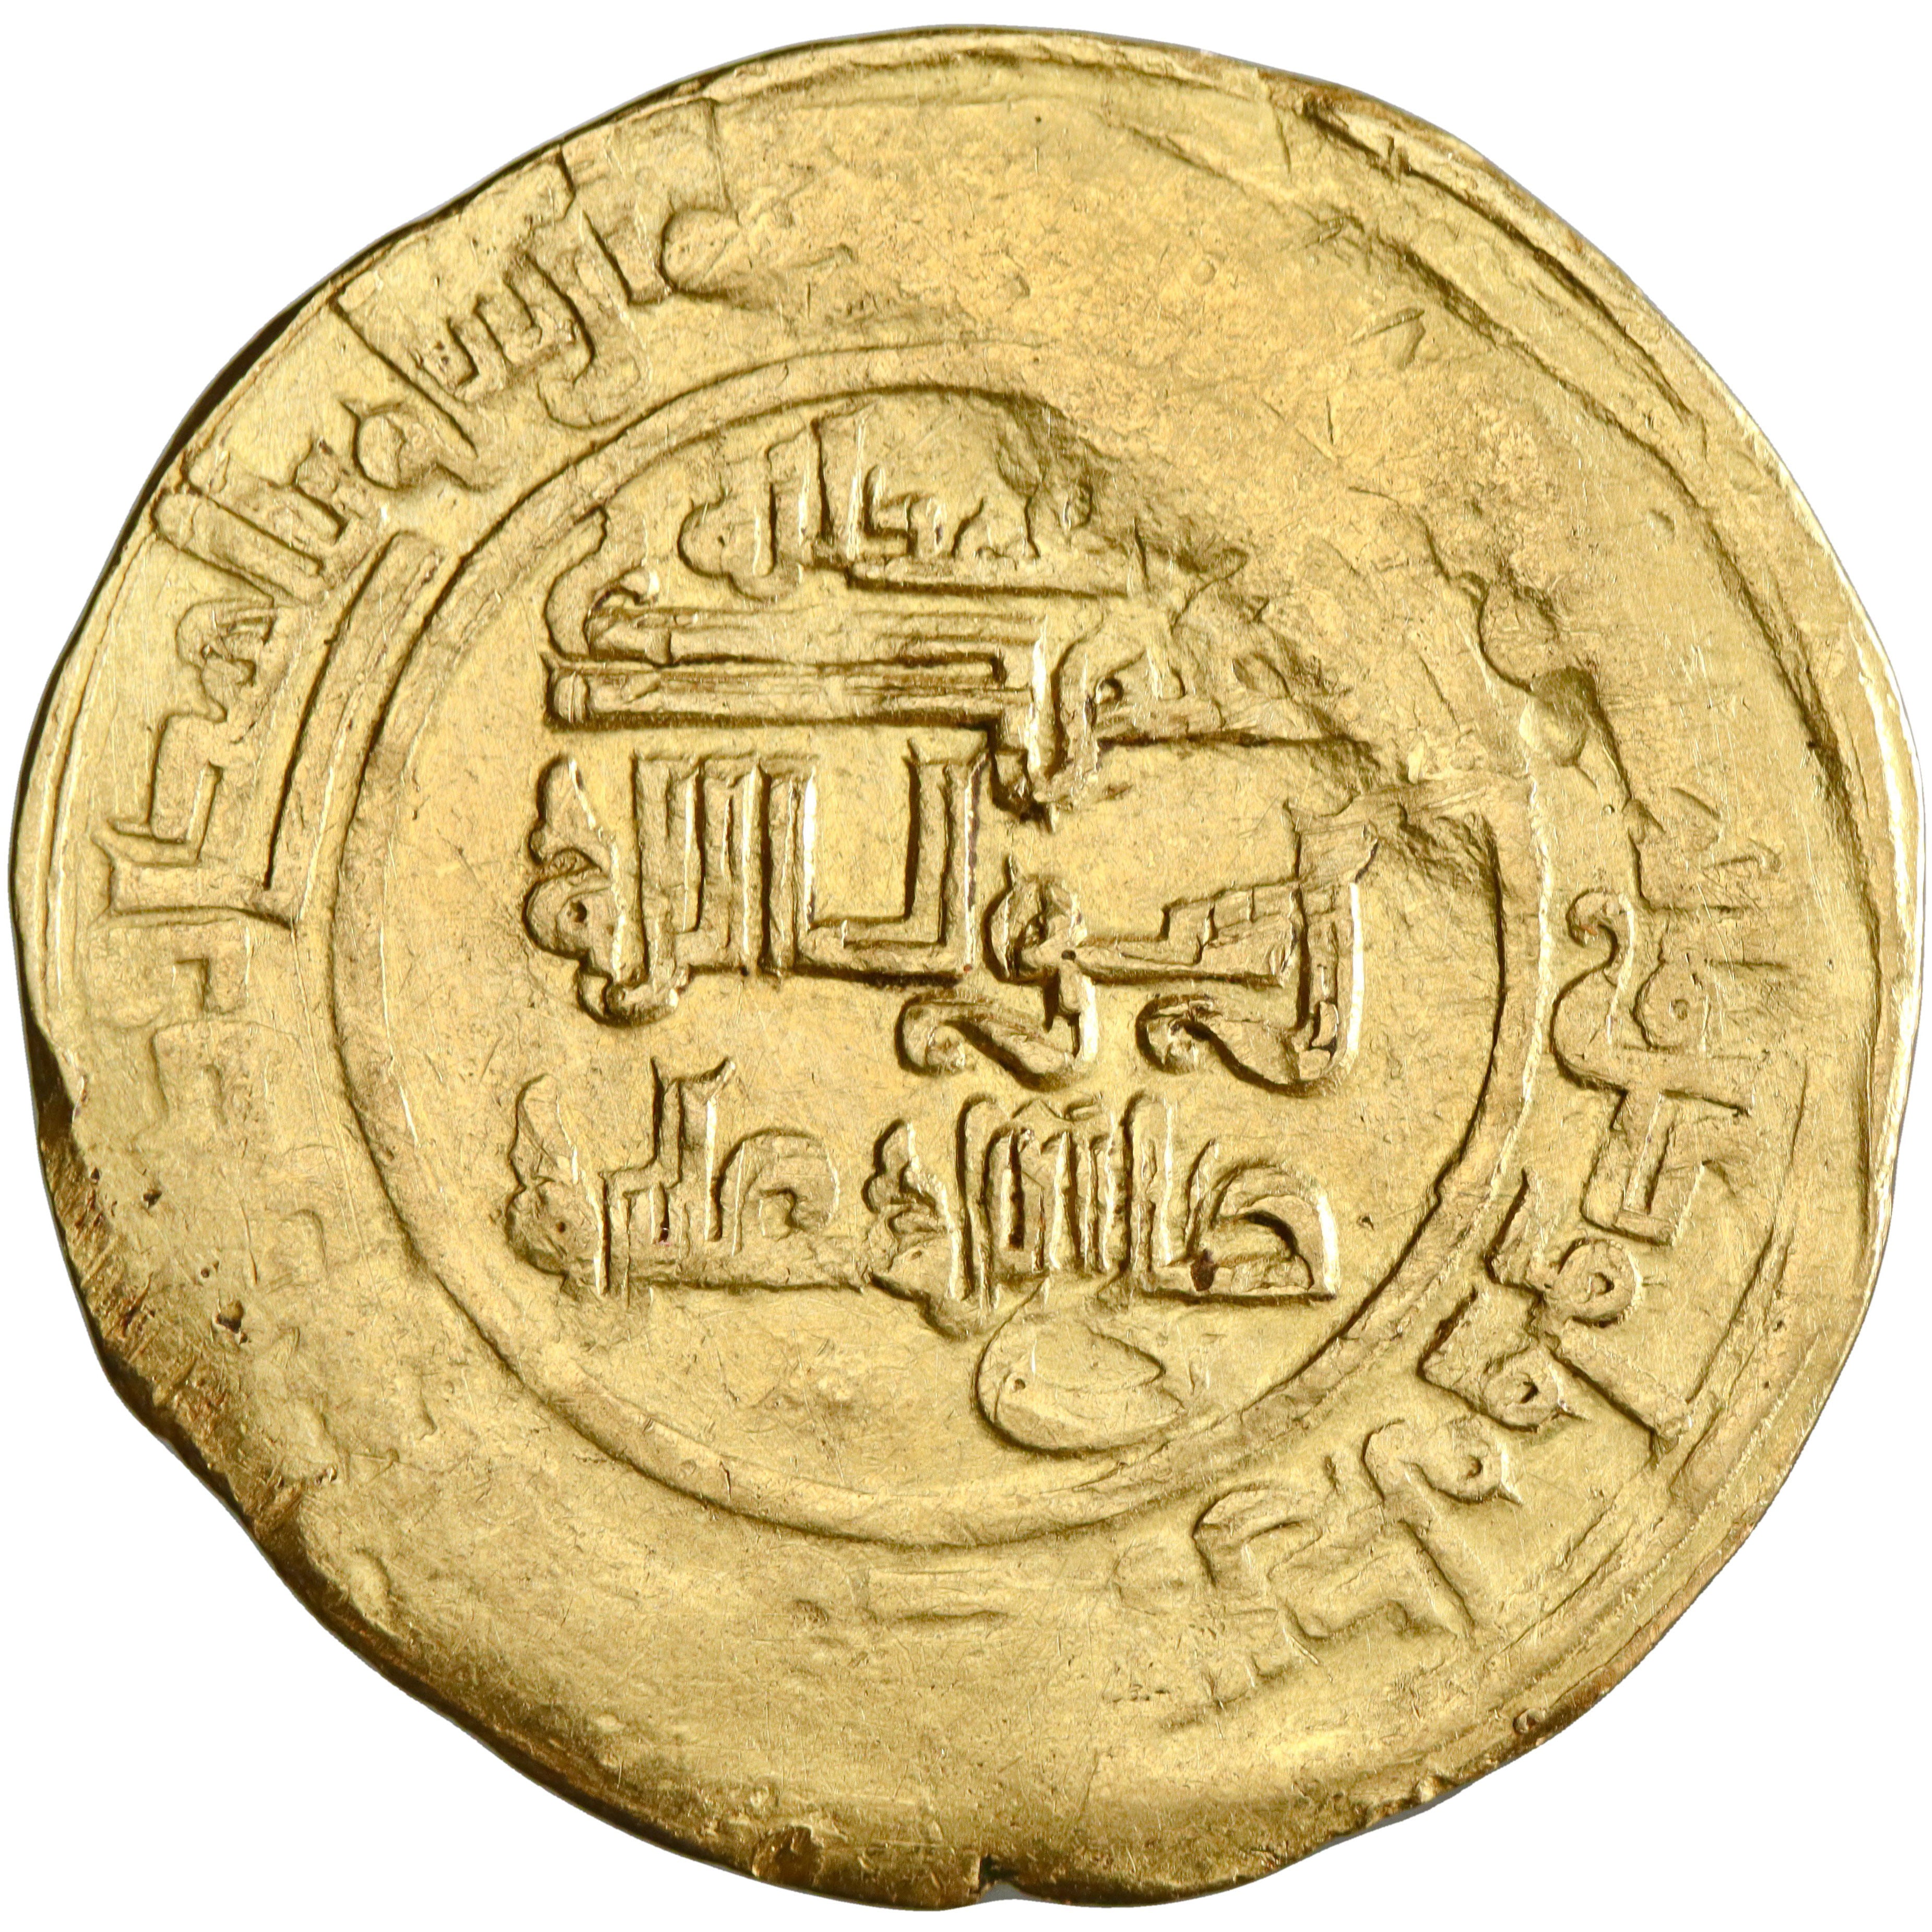 Abbasid, al-Mustansir billah, gold dinar, Madinat al-Salam (Baghdad) mint, AH 623